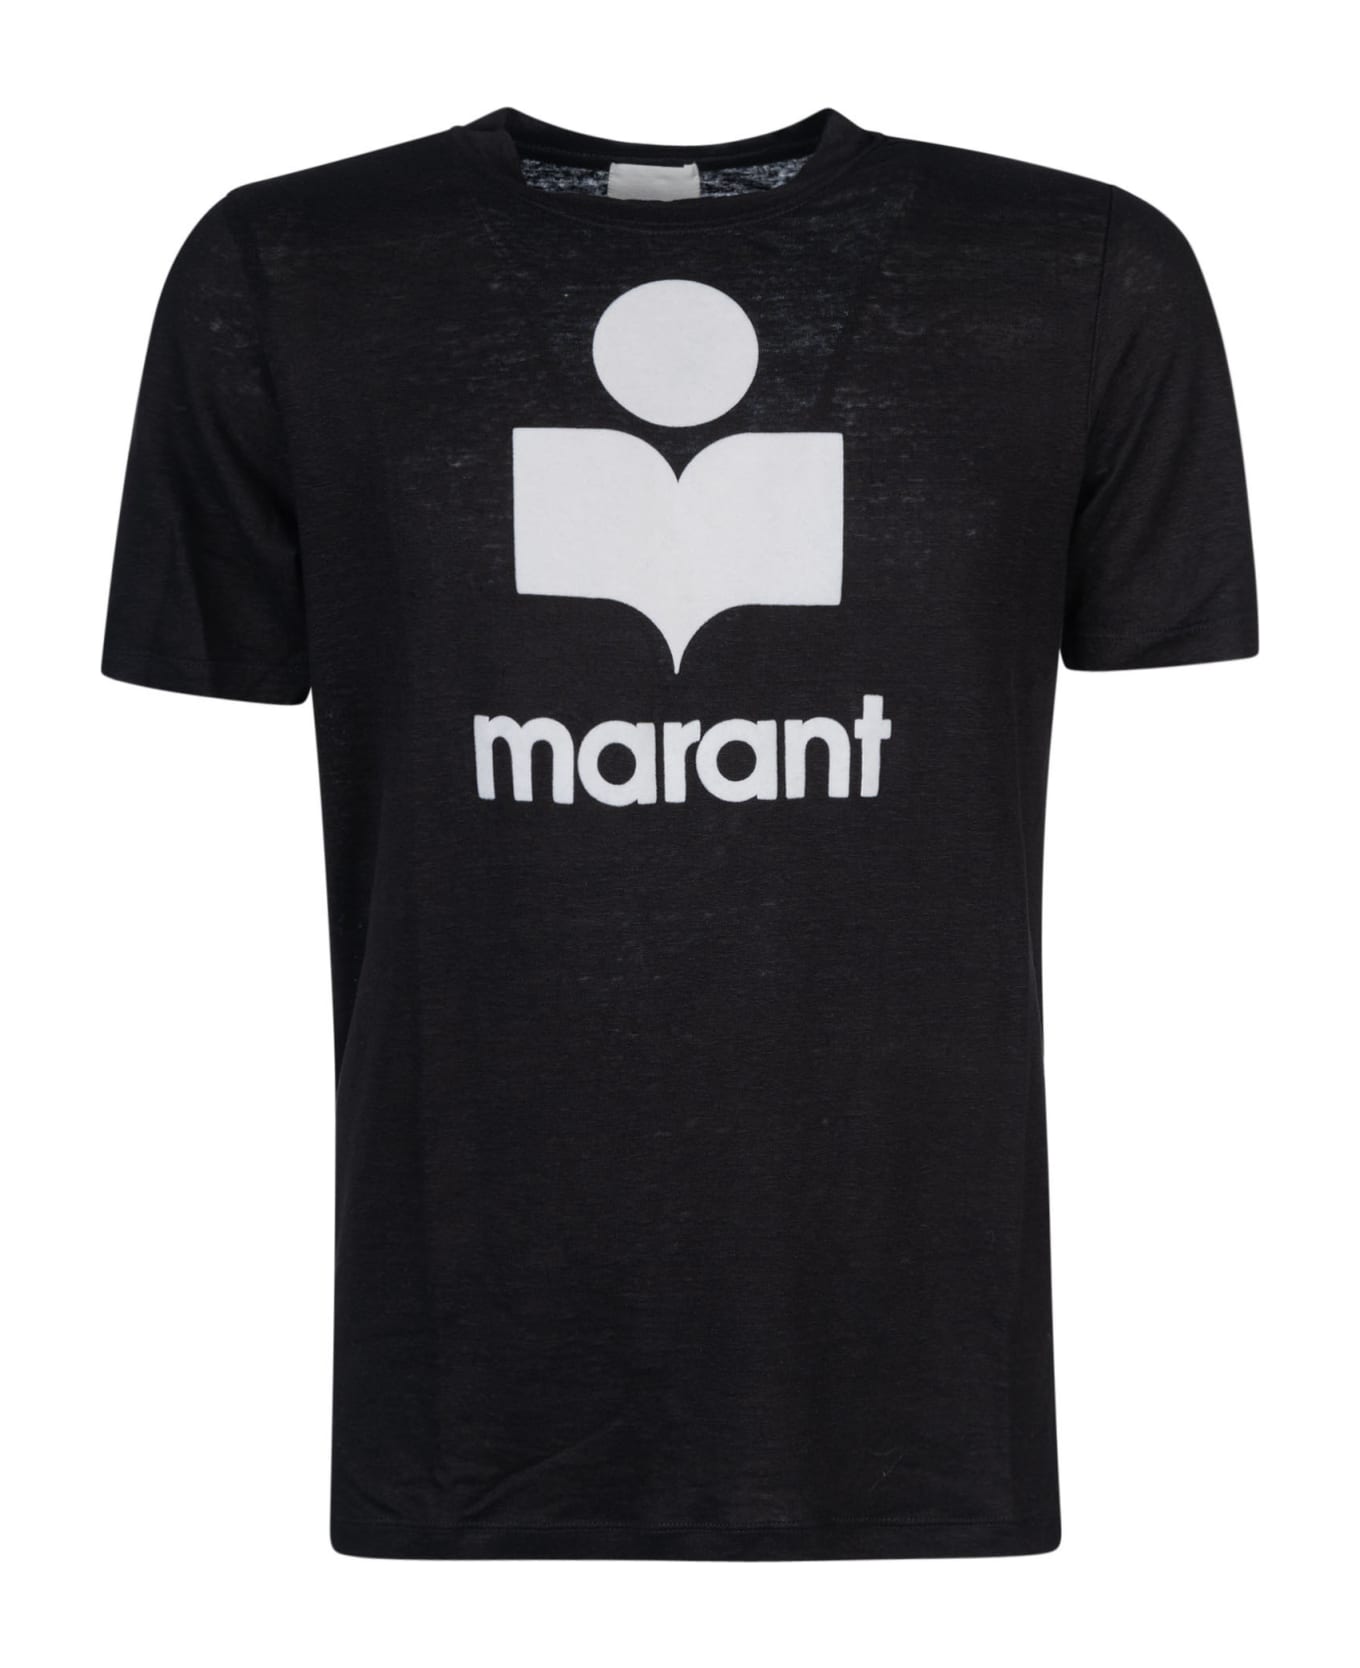 Isabel Marant Karman T-shirt - Black